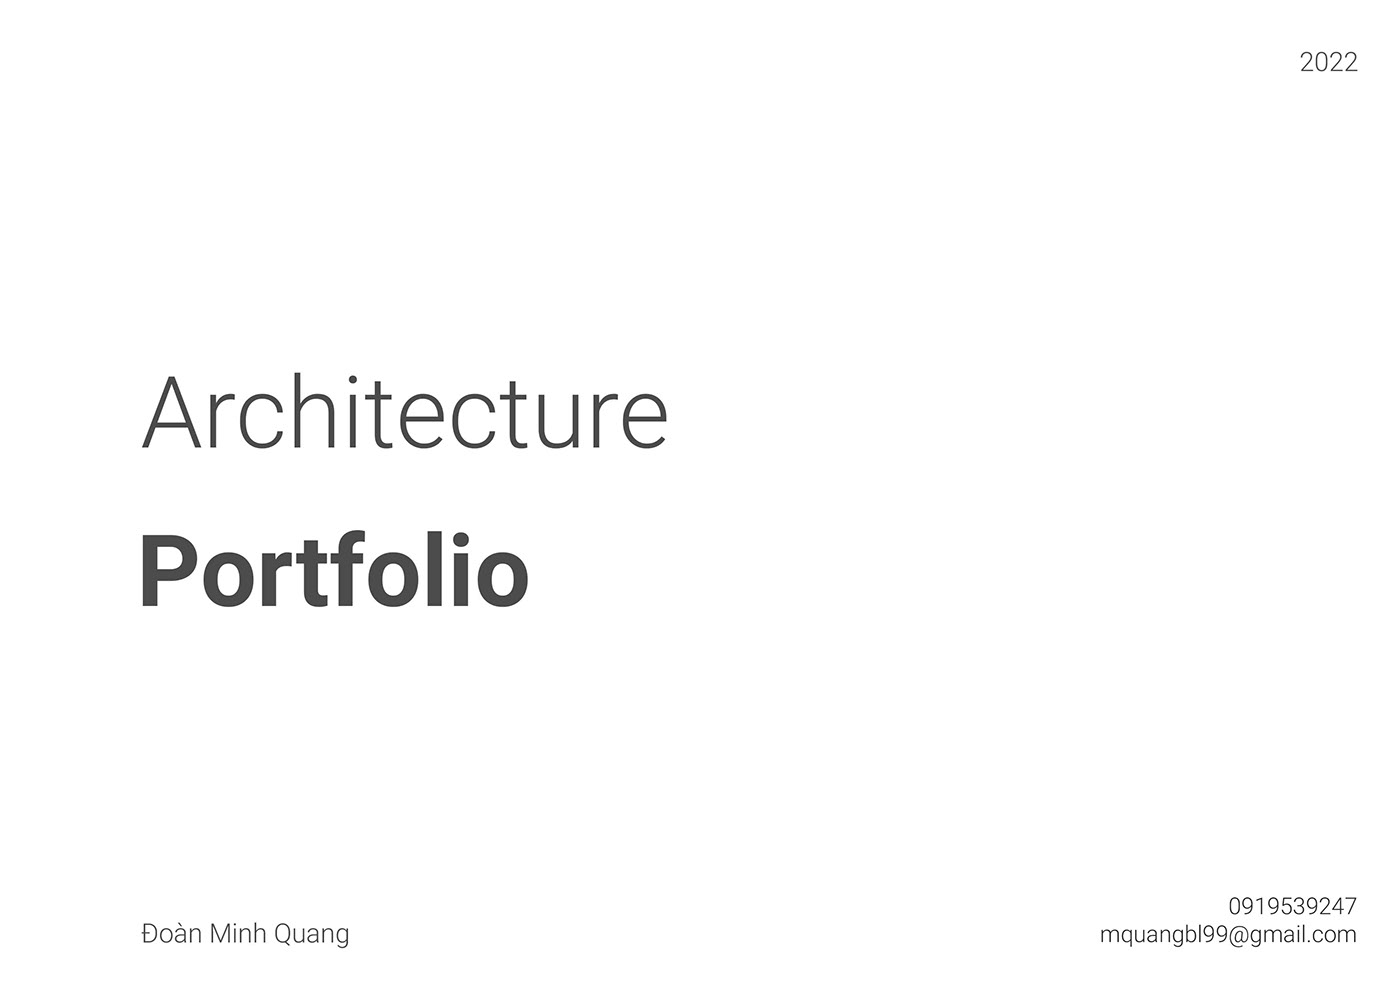 architect architectural architecture Porfolio portfolio